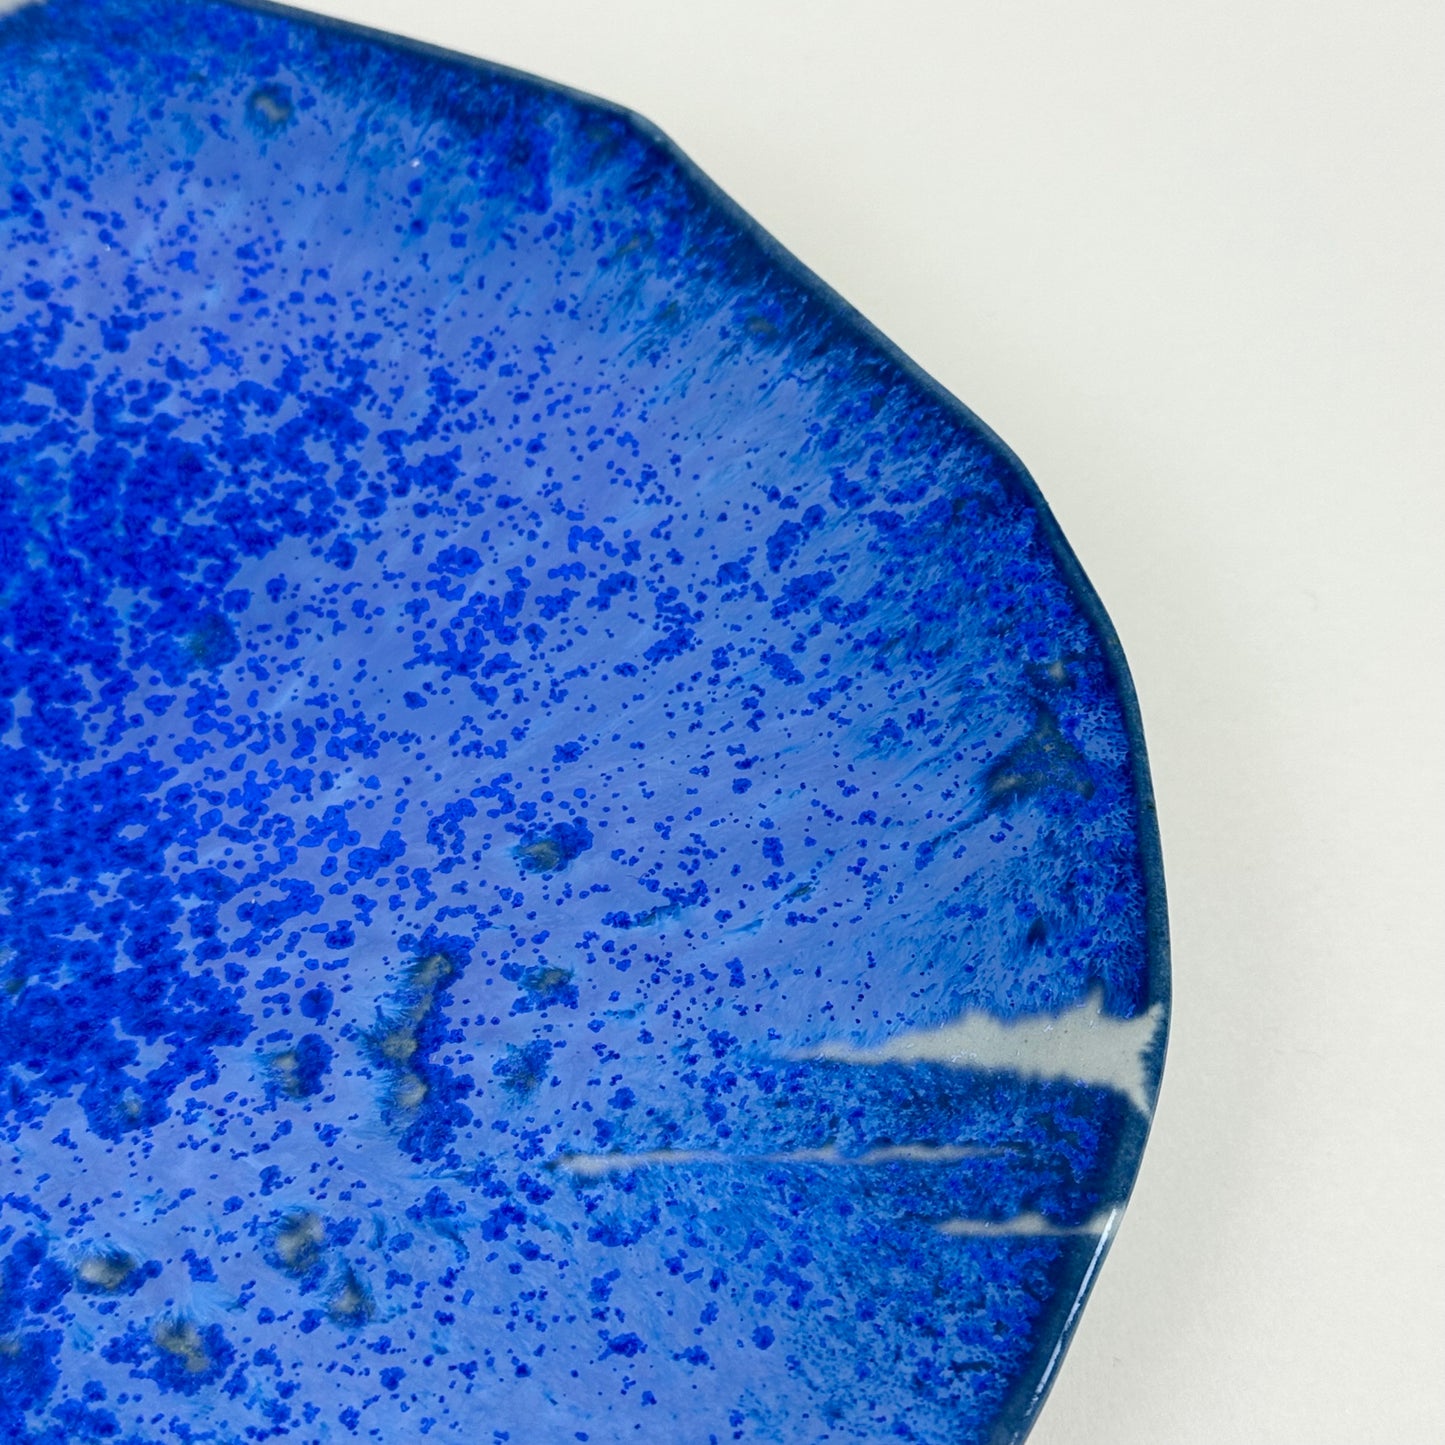 Stoneware plate/bowl by Malwina Kleparska